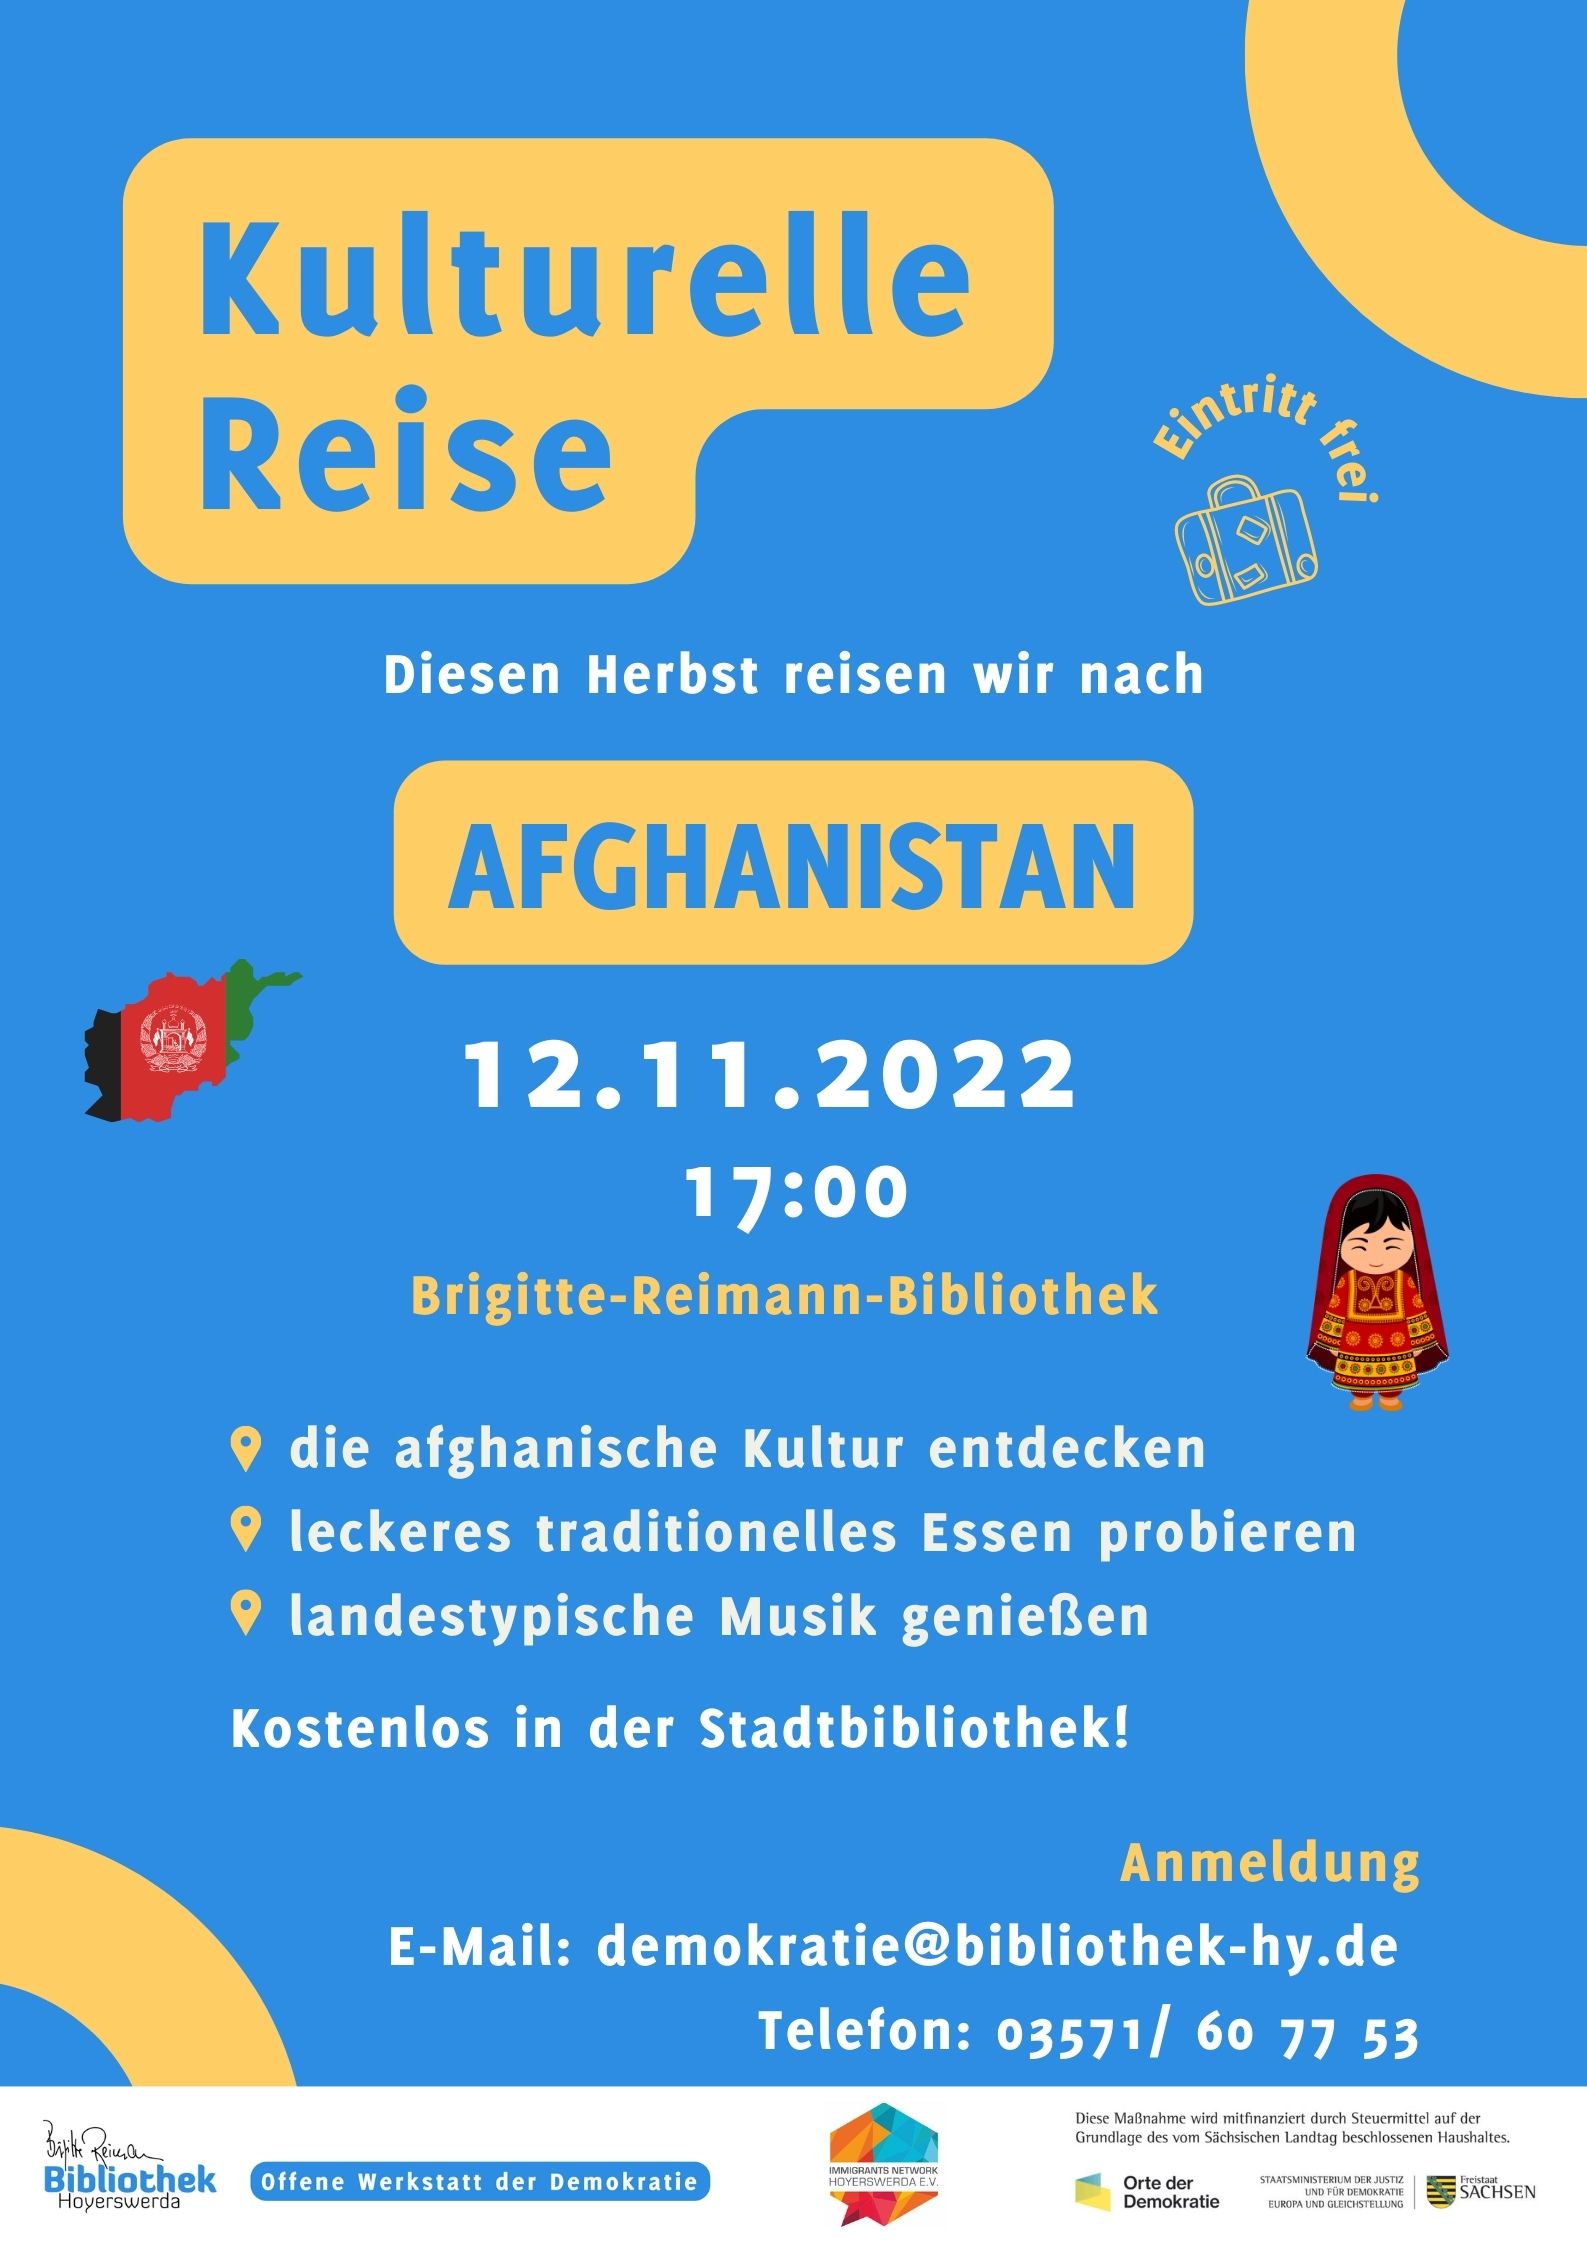 Kulturelle Reise nach Afghanistan am 12.11.2022